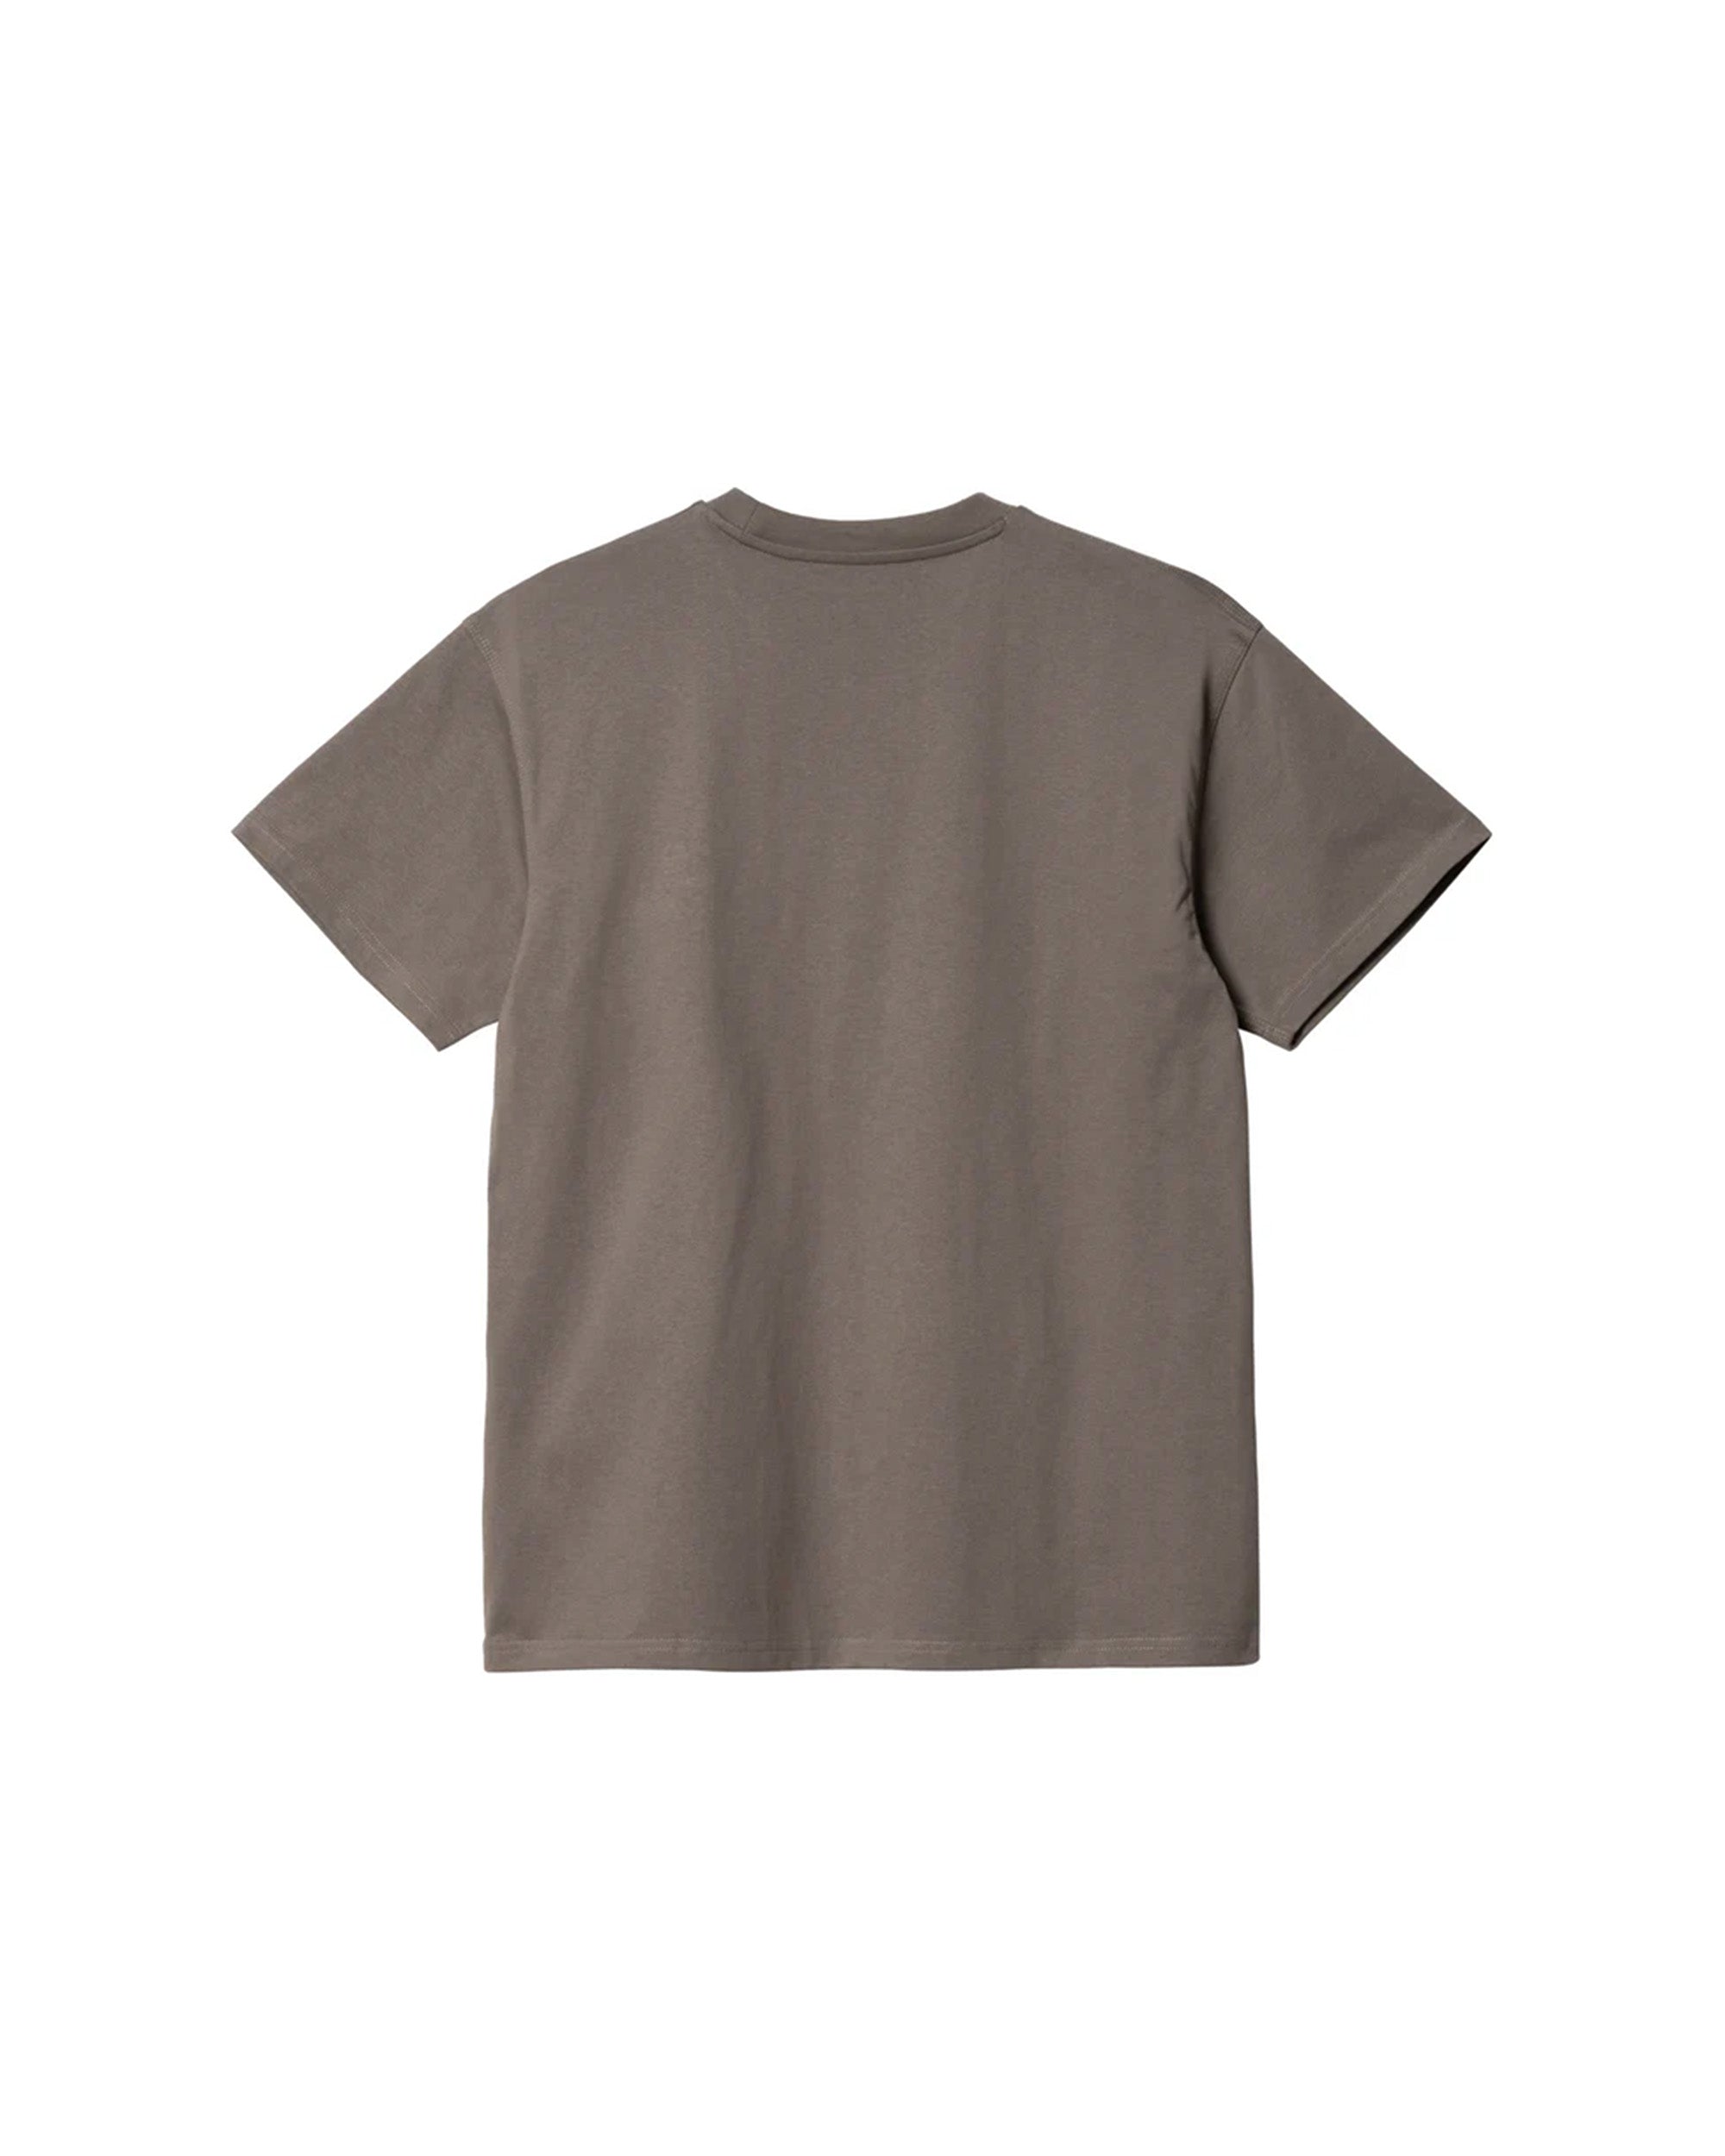 S/S American Script T-Shirt - Teide